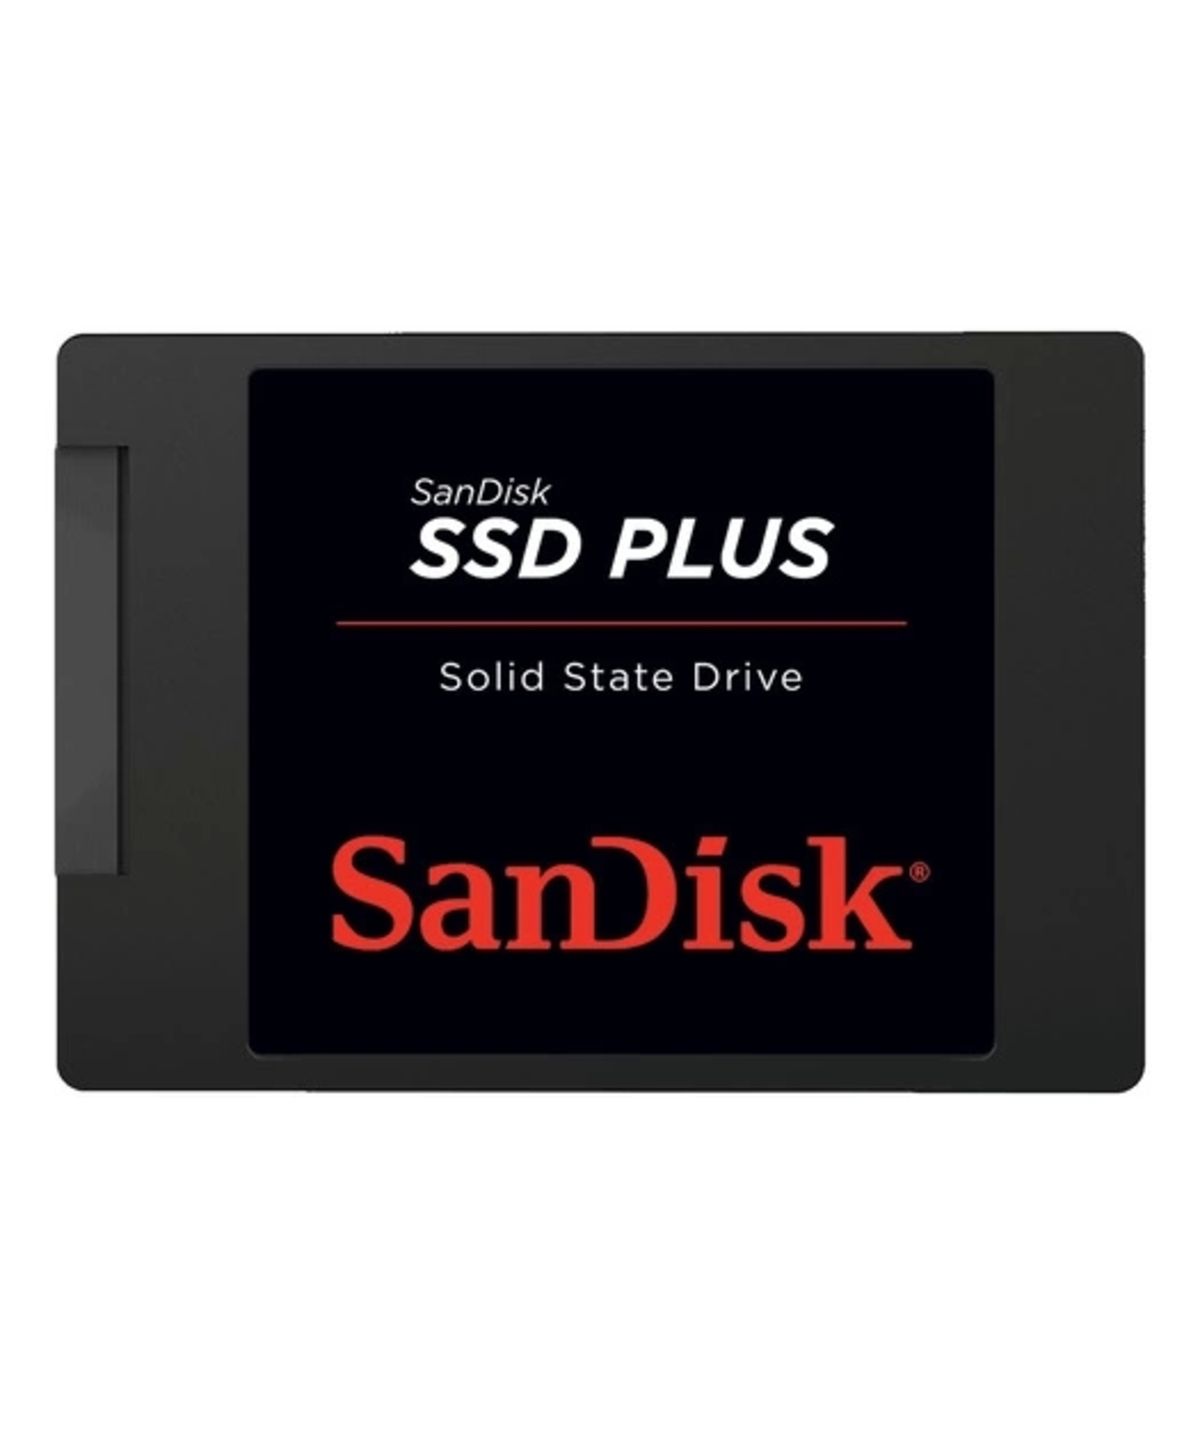 Sandisk Plus 240GB 530MB-440MB/s Sata 3 2.5" SSD SDSSDA-240G-G26